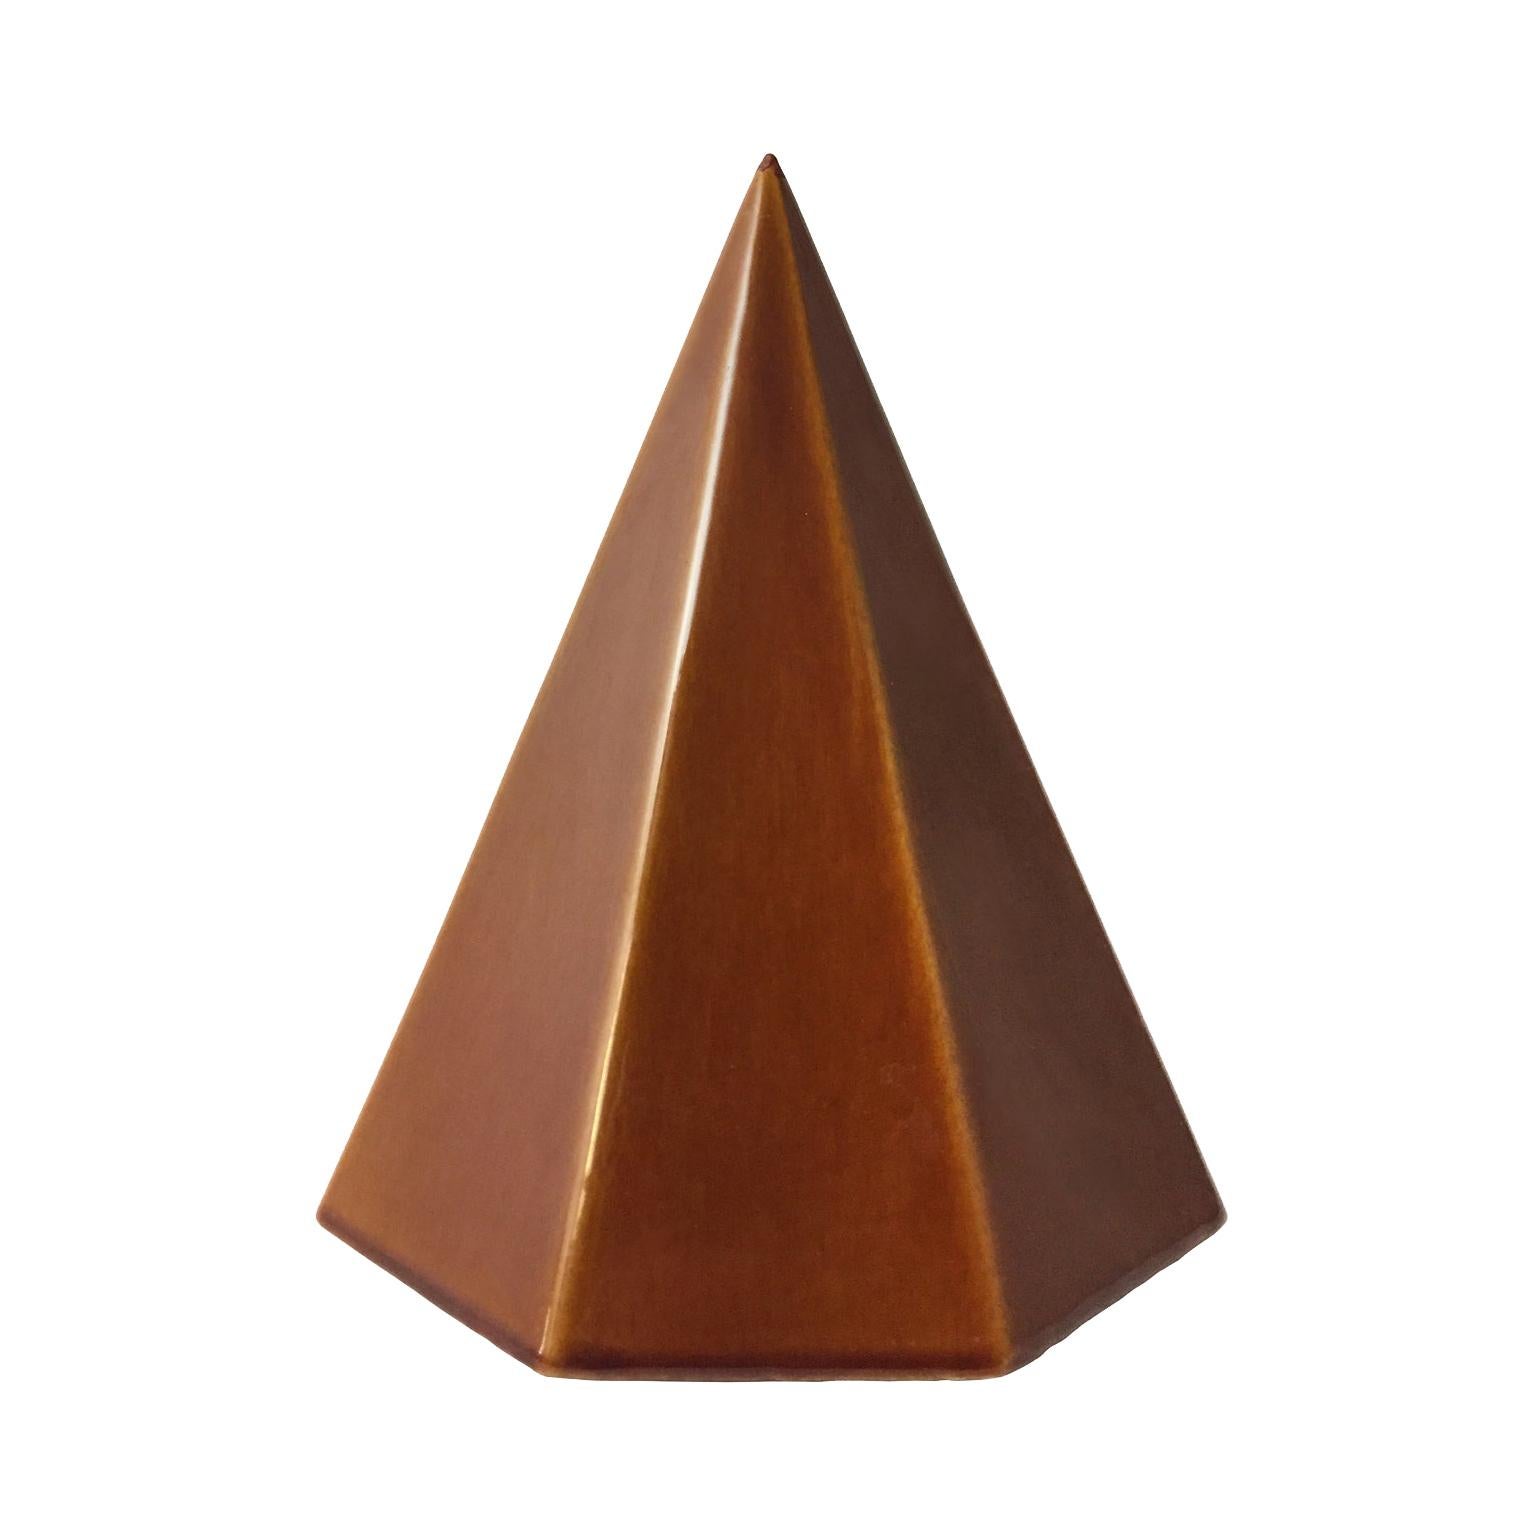 1960s Modernist Ceramic Pyramid with Auburn Glaze For Sale